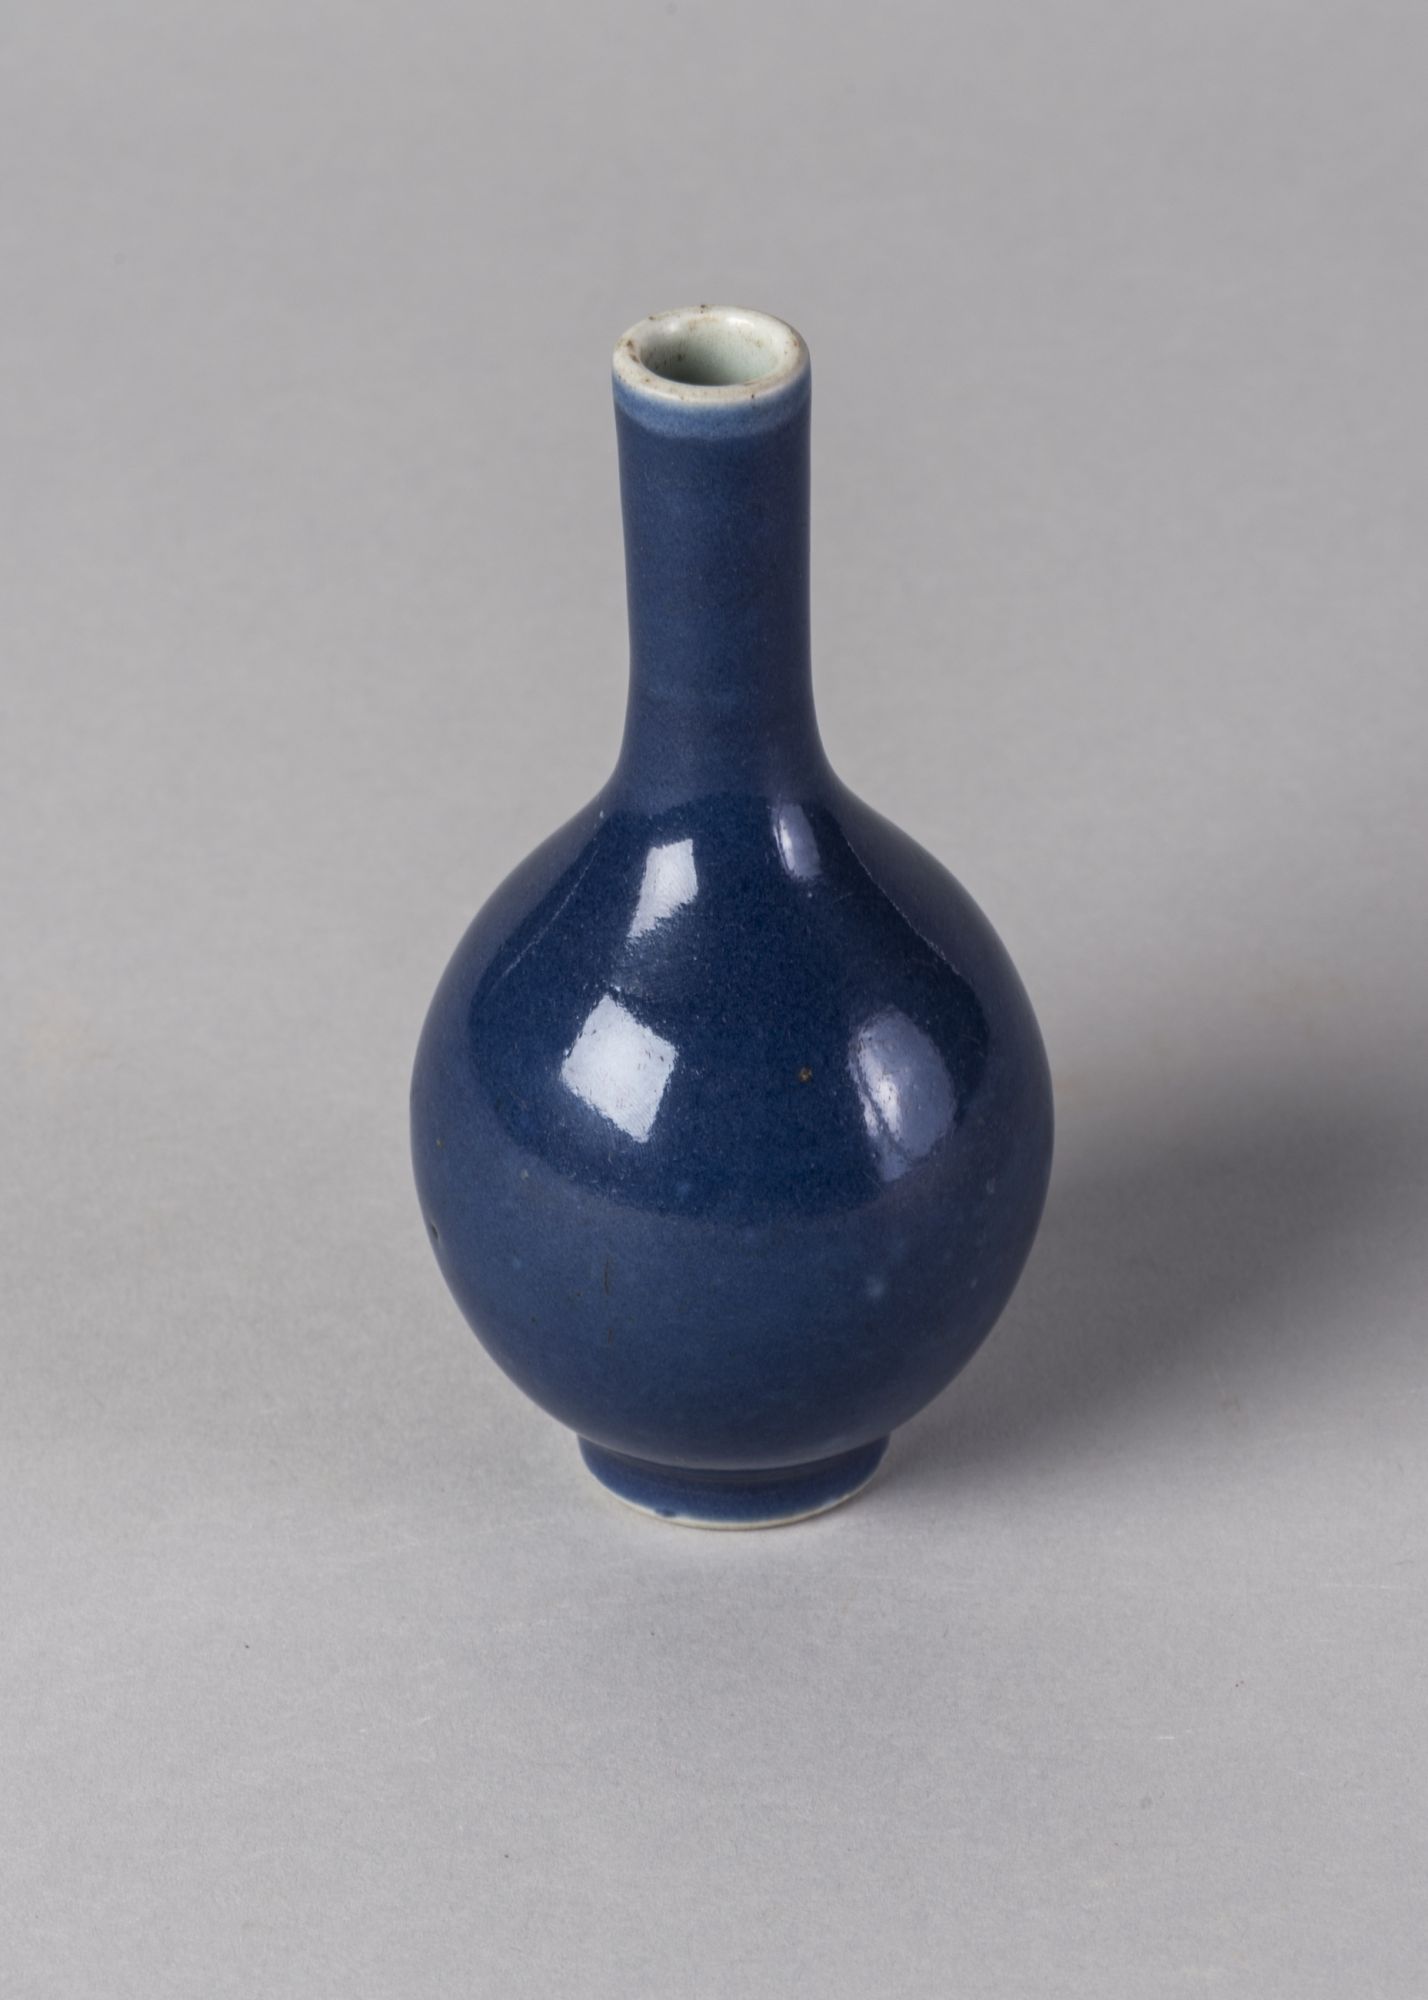 A Chinese porcelain monochrome powder blue bottle vase, 18th century, - Image 2 of 2